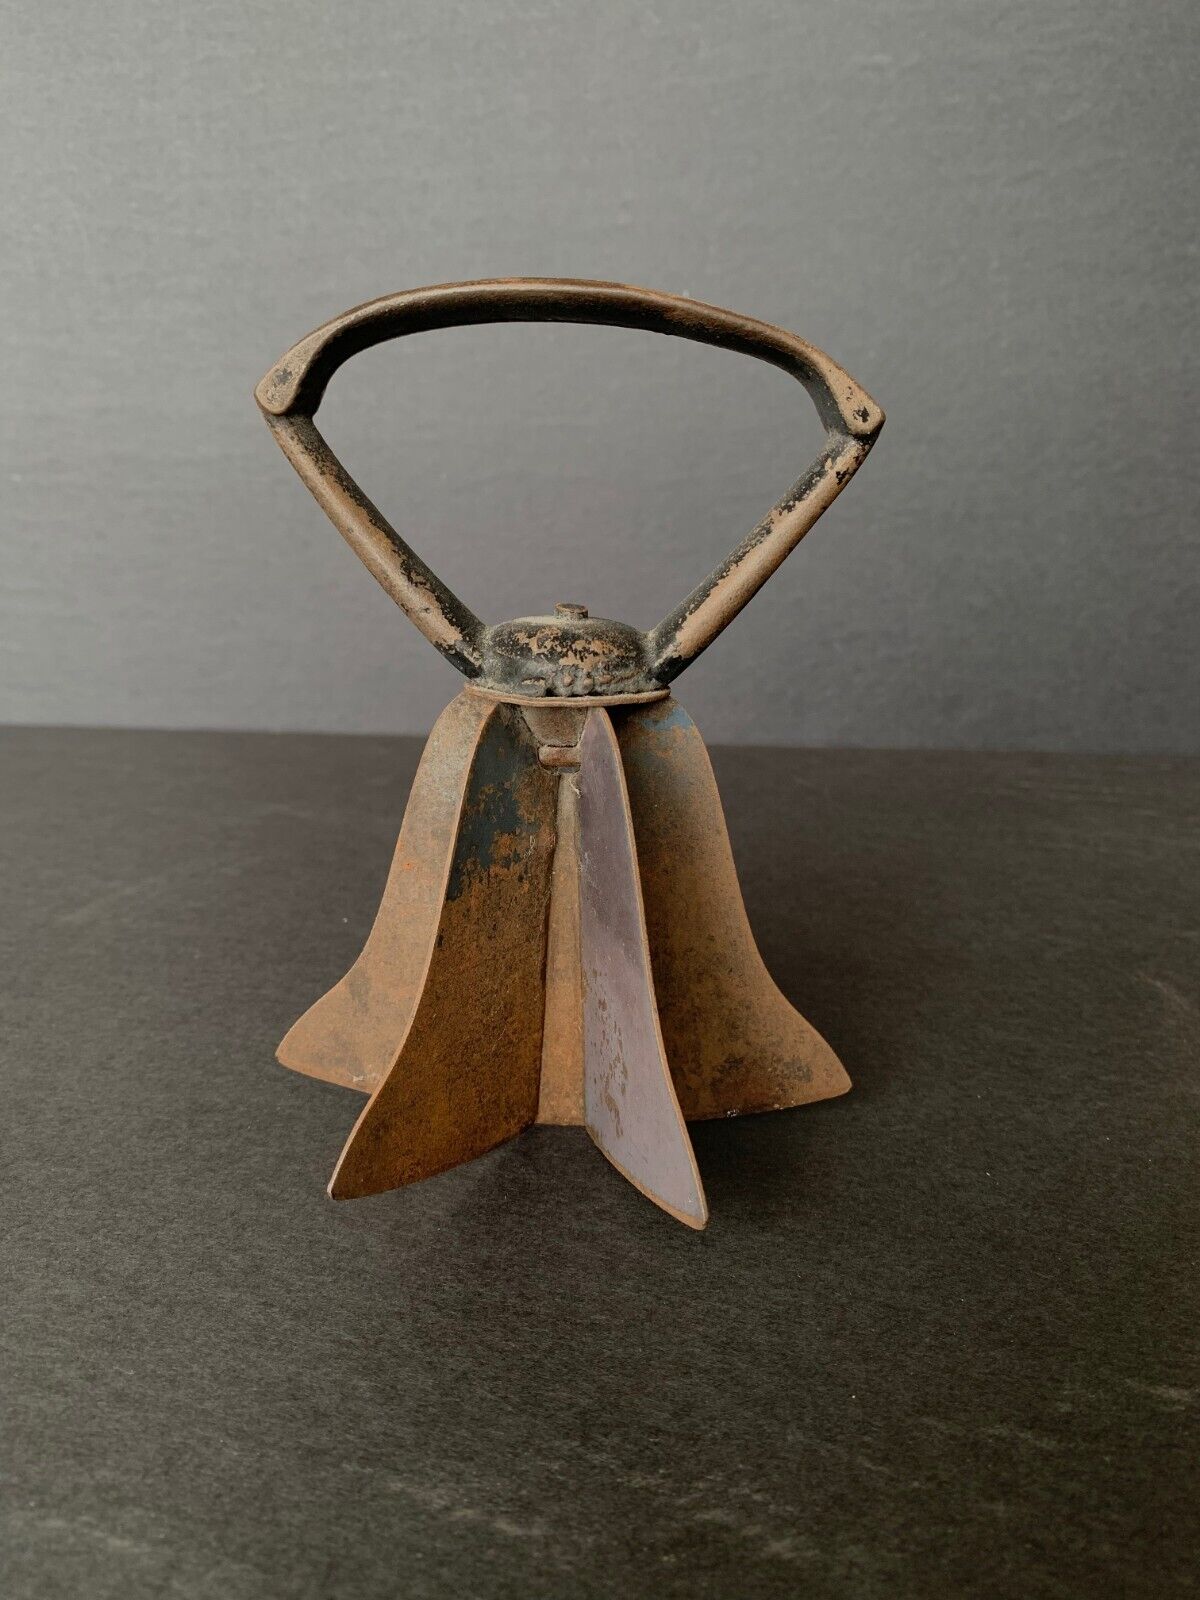 Antique metal food chopper pastry cutter tool Primitive